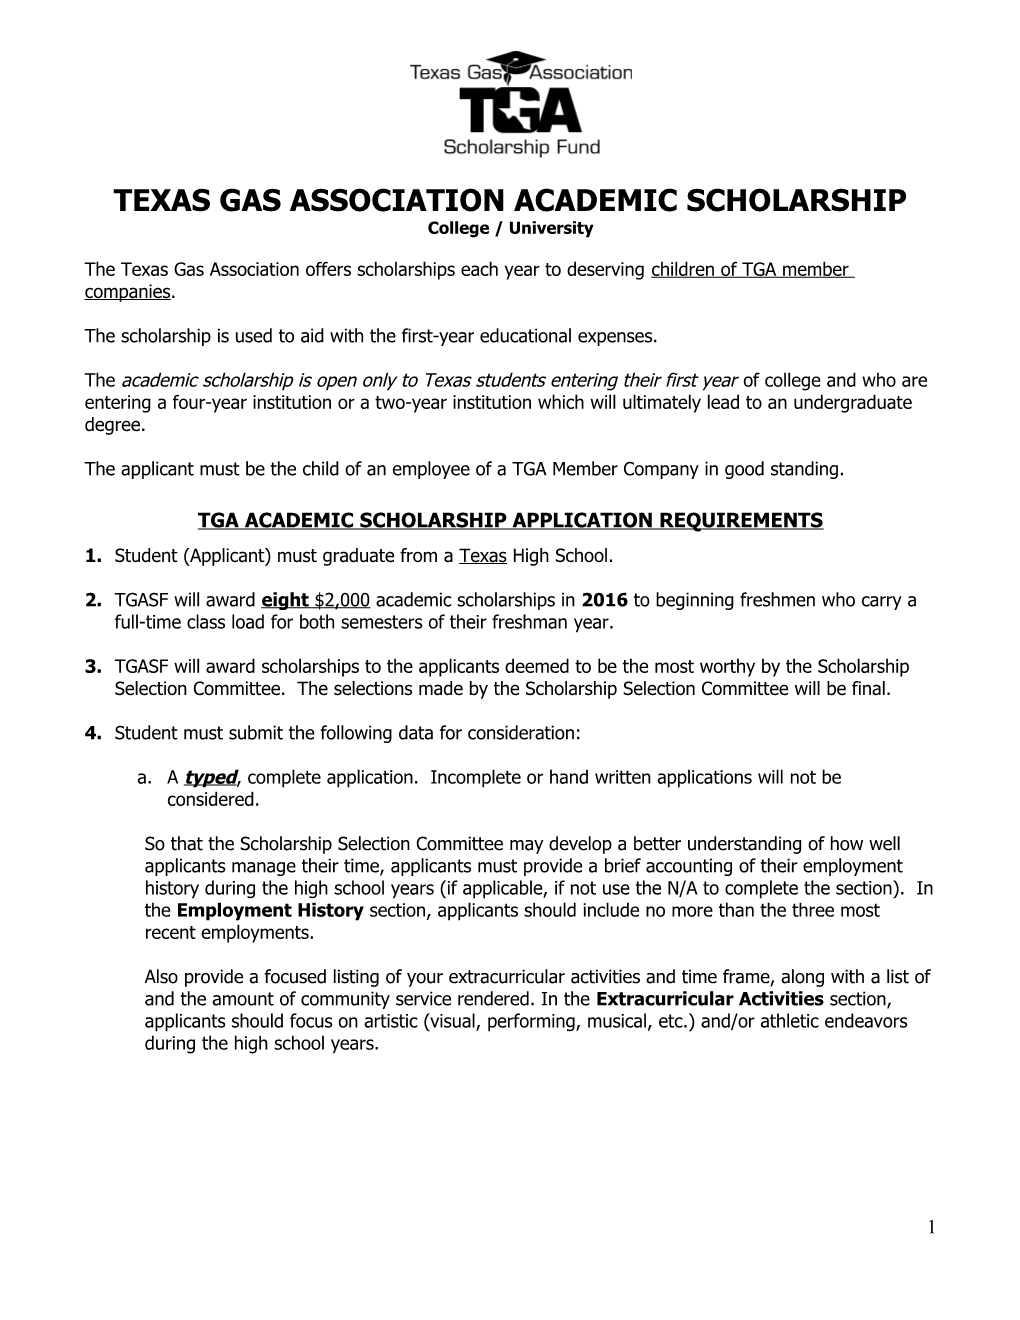 Texas Gas Association Scholarship